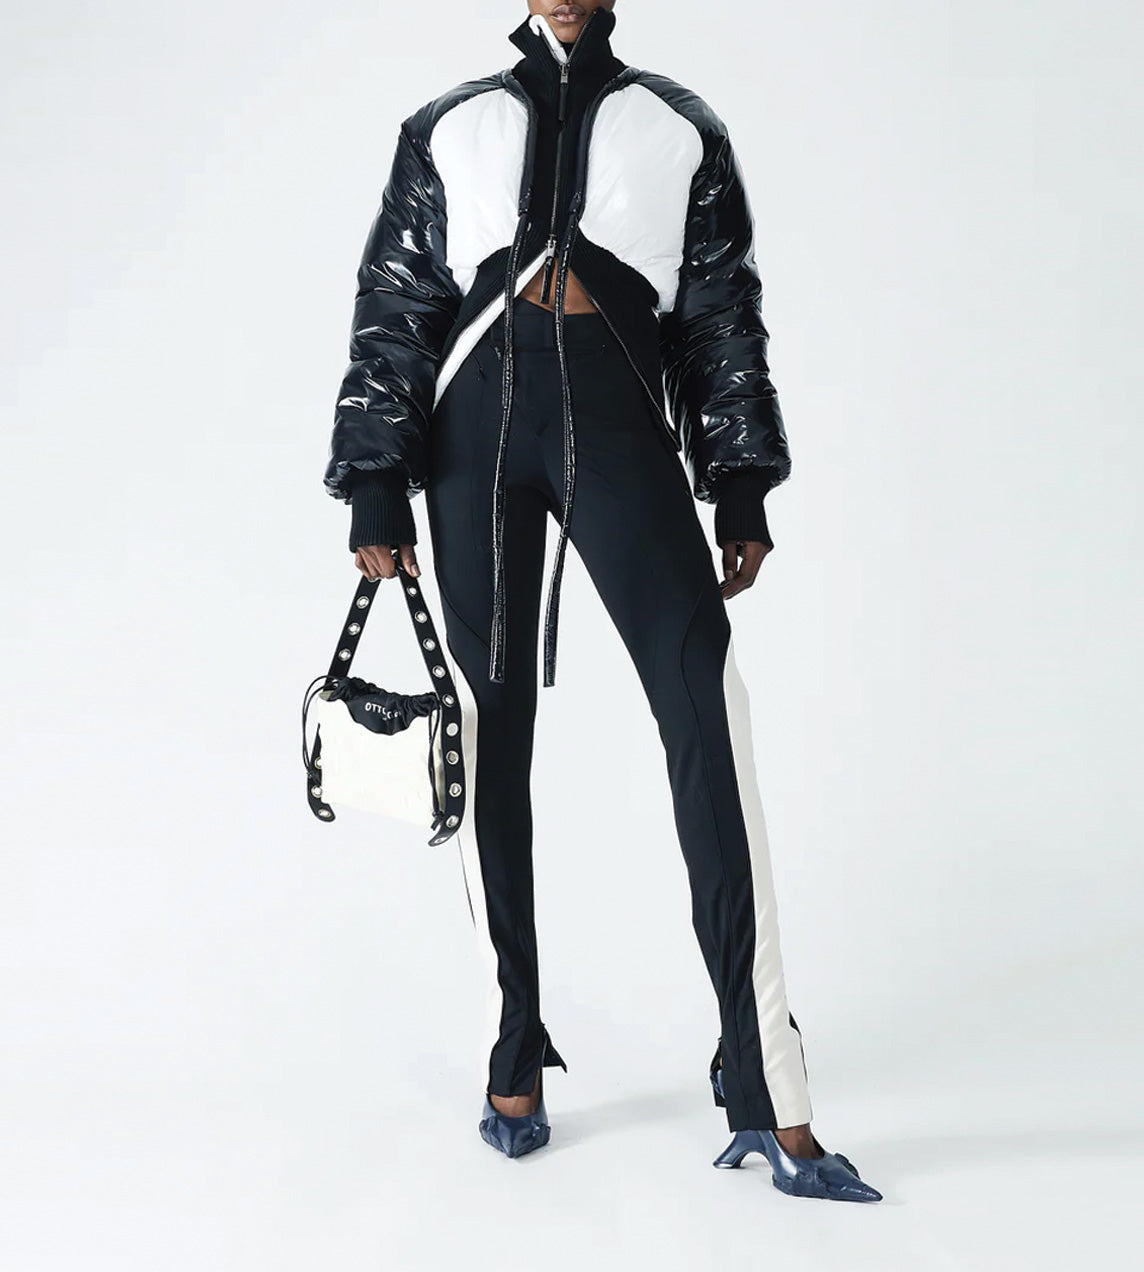 Ottolinger - Fitted Contrast Suit Pants Black